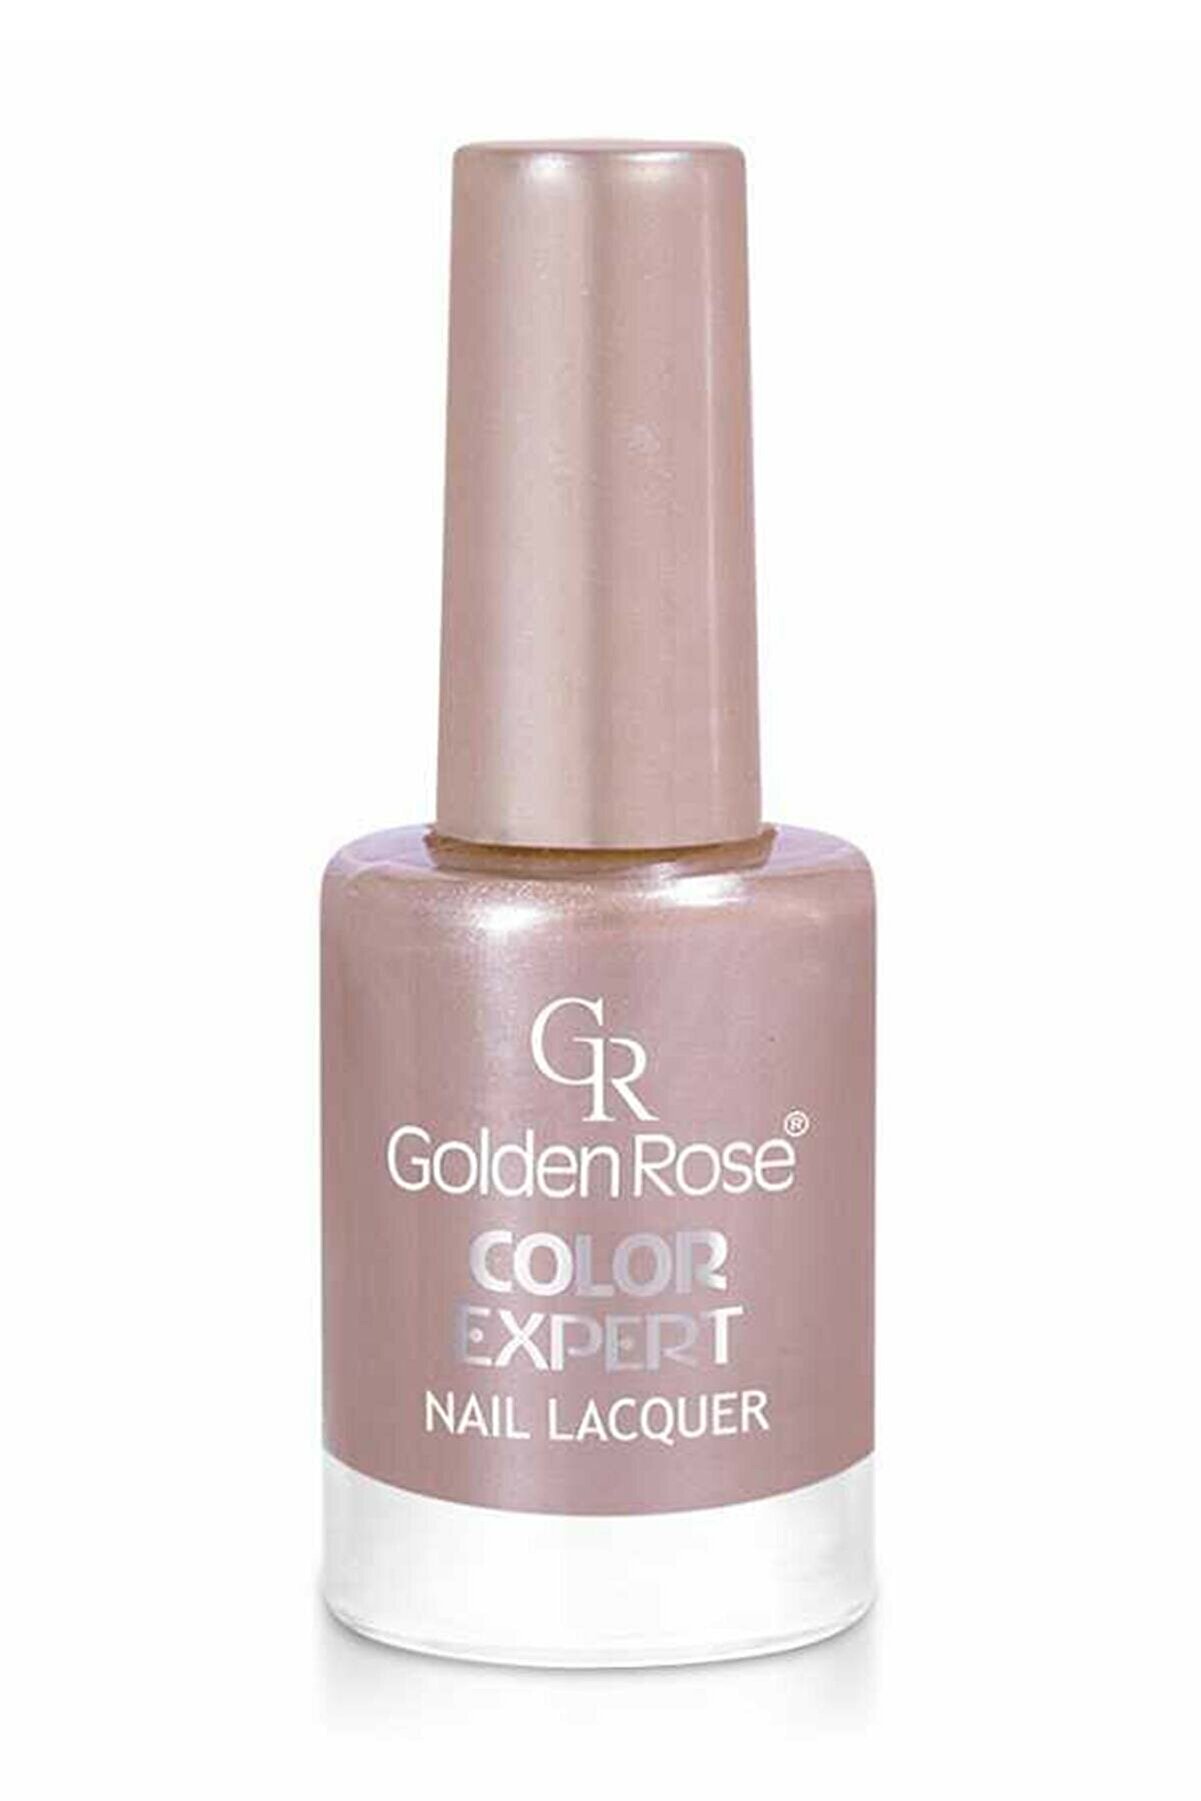 Golden Rose Oje - Color Expert Nail Lacquer No: 33